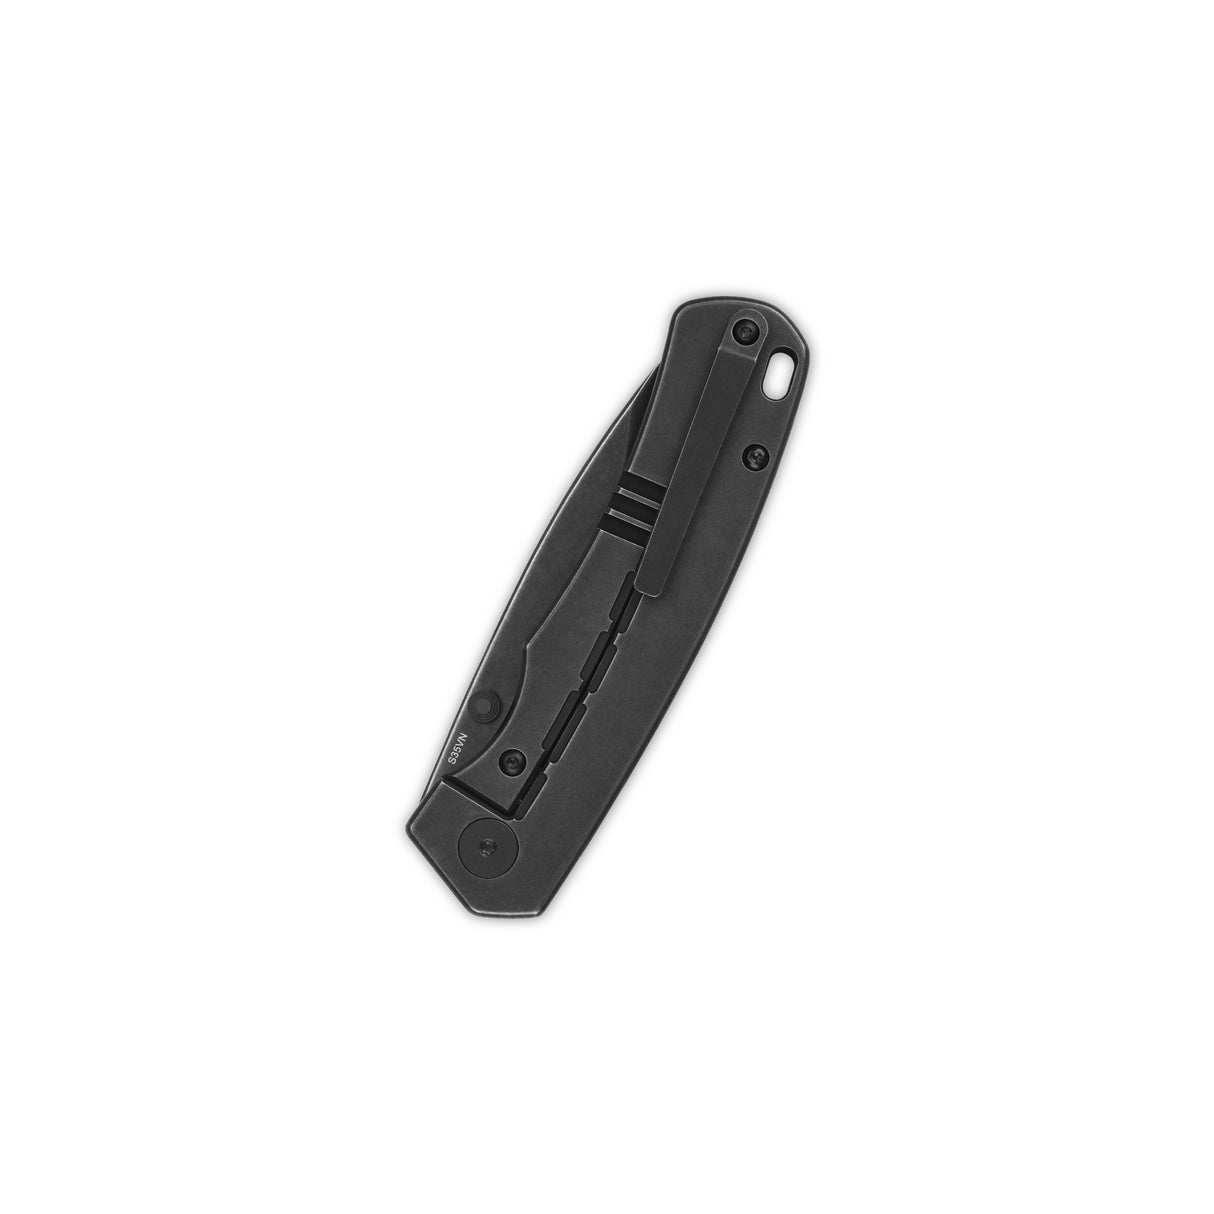 QSP Puffin Frame Lock Pocket Knife S35VN Blade Titanium with Carbon Fiber inlay Handle